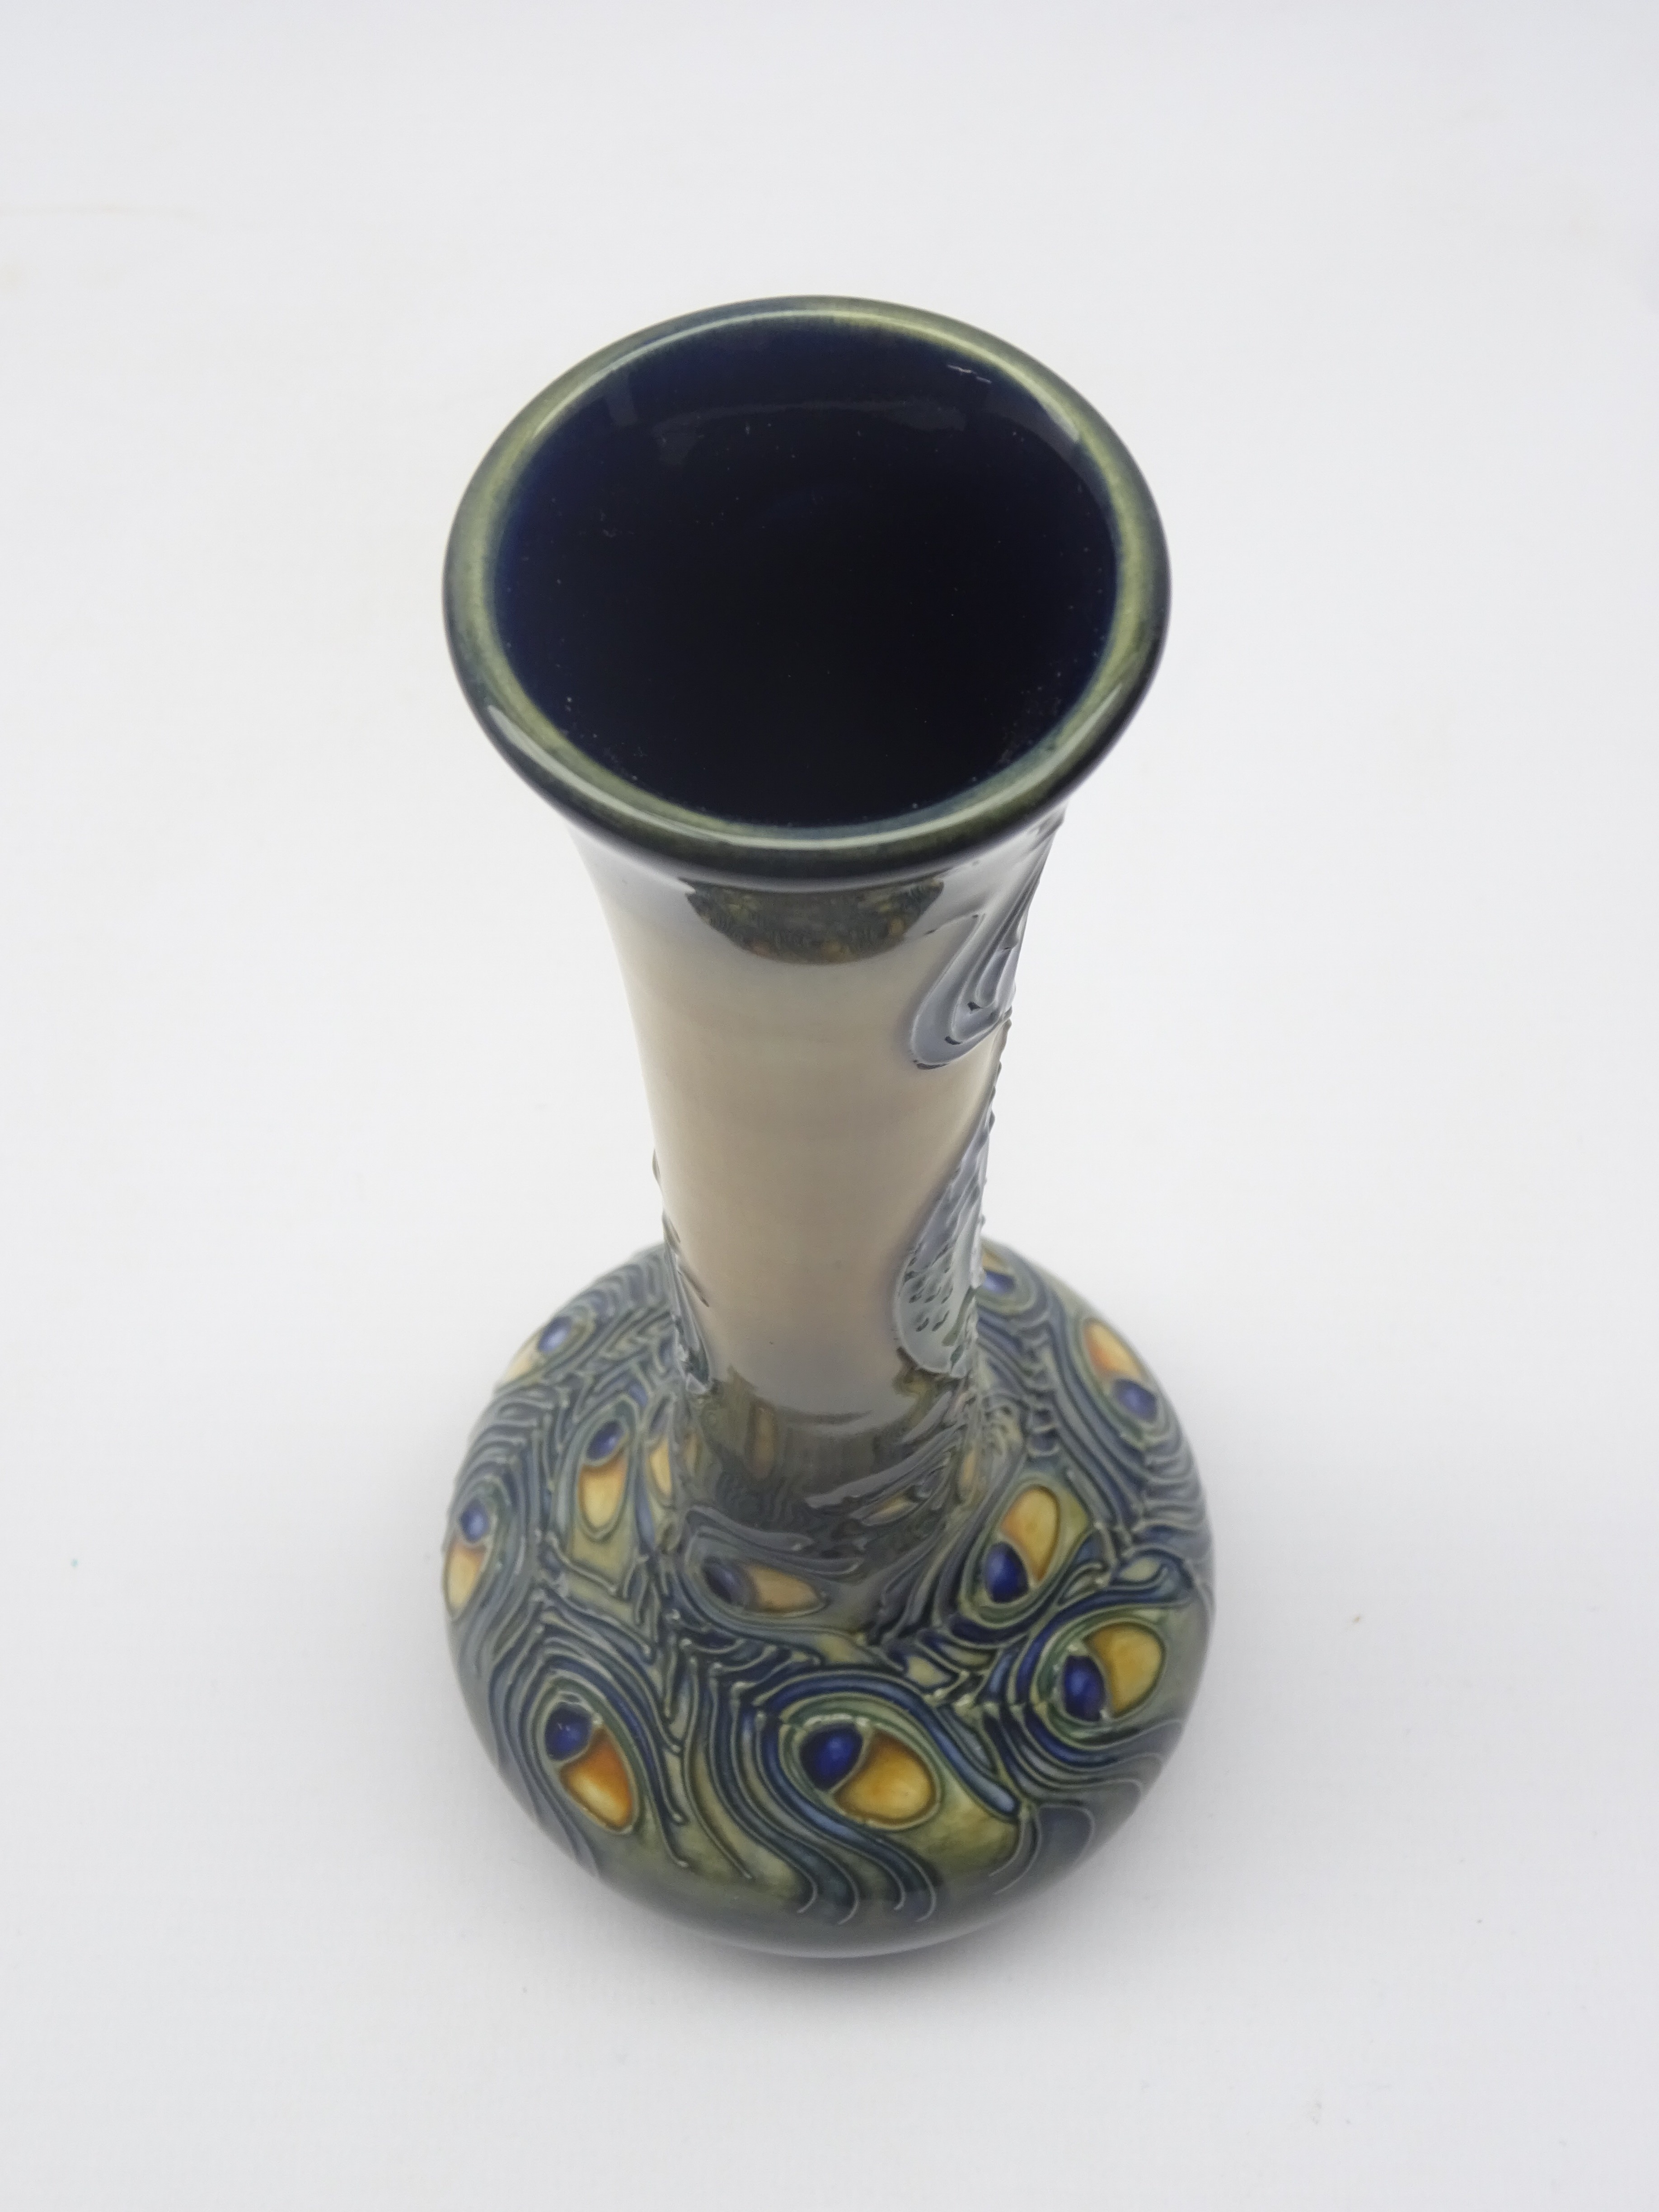 Moorcroft Phoenix bird pattern vase, designed by Rachel Bishop, - Image 2 of 2